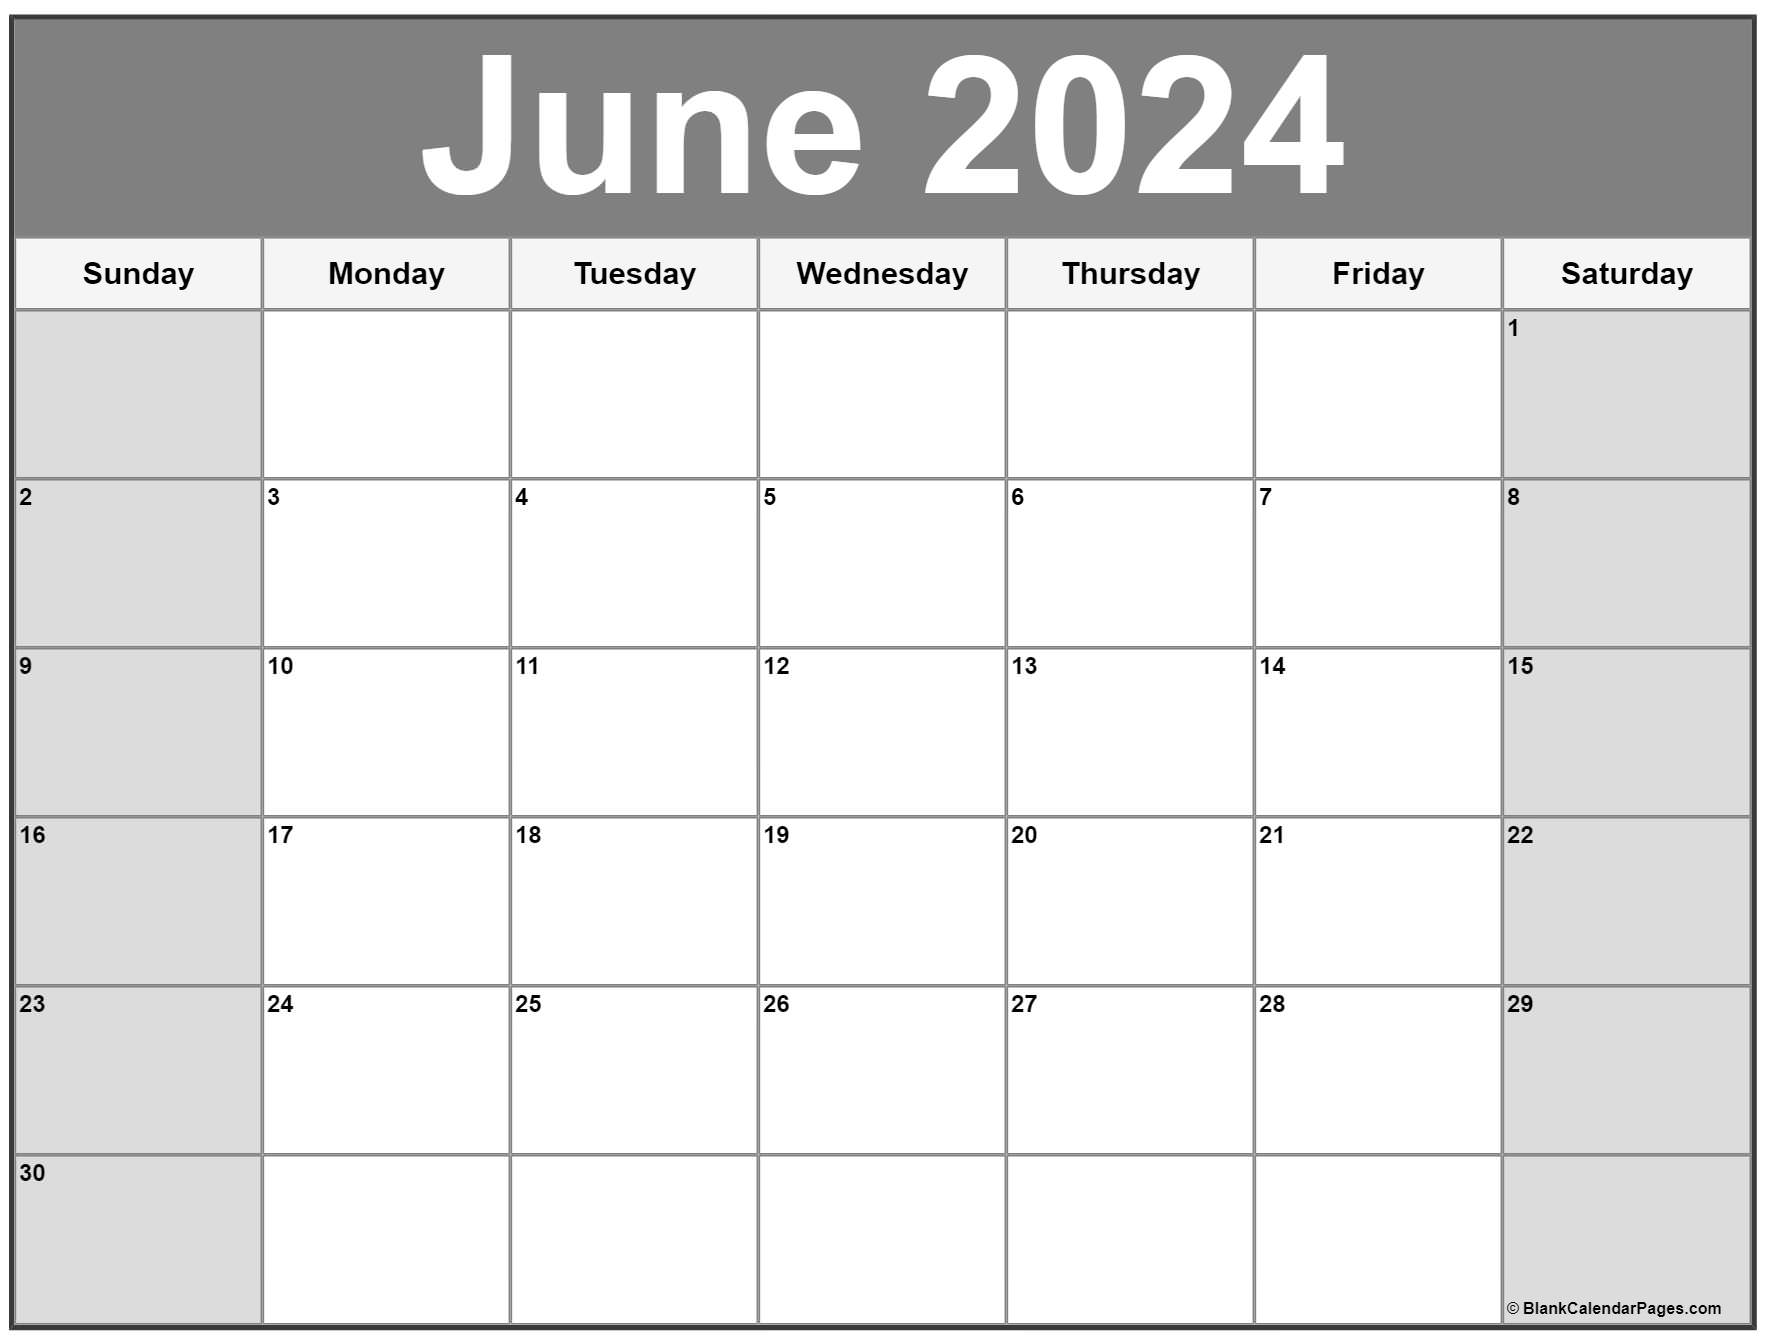 June 2022 calendar free printable calendar